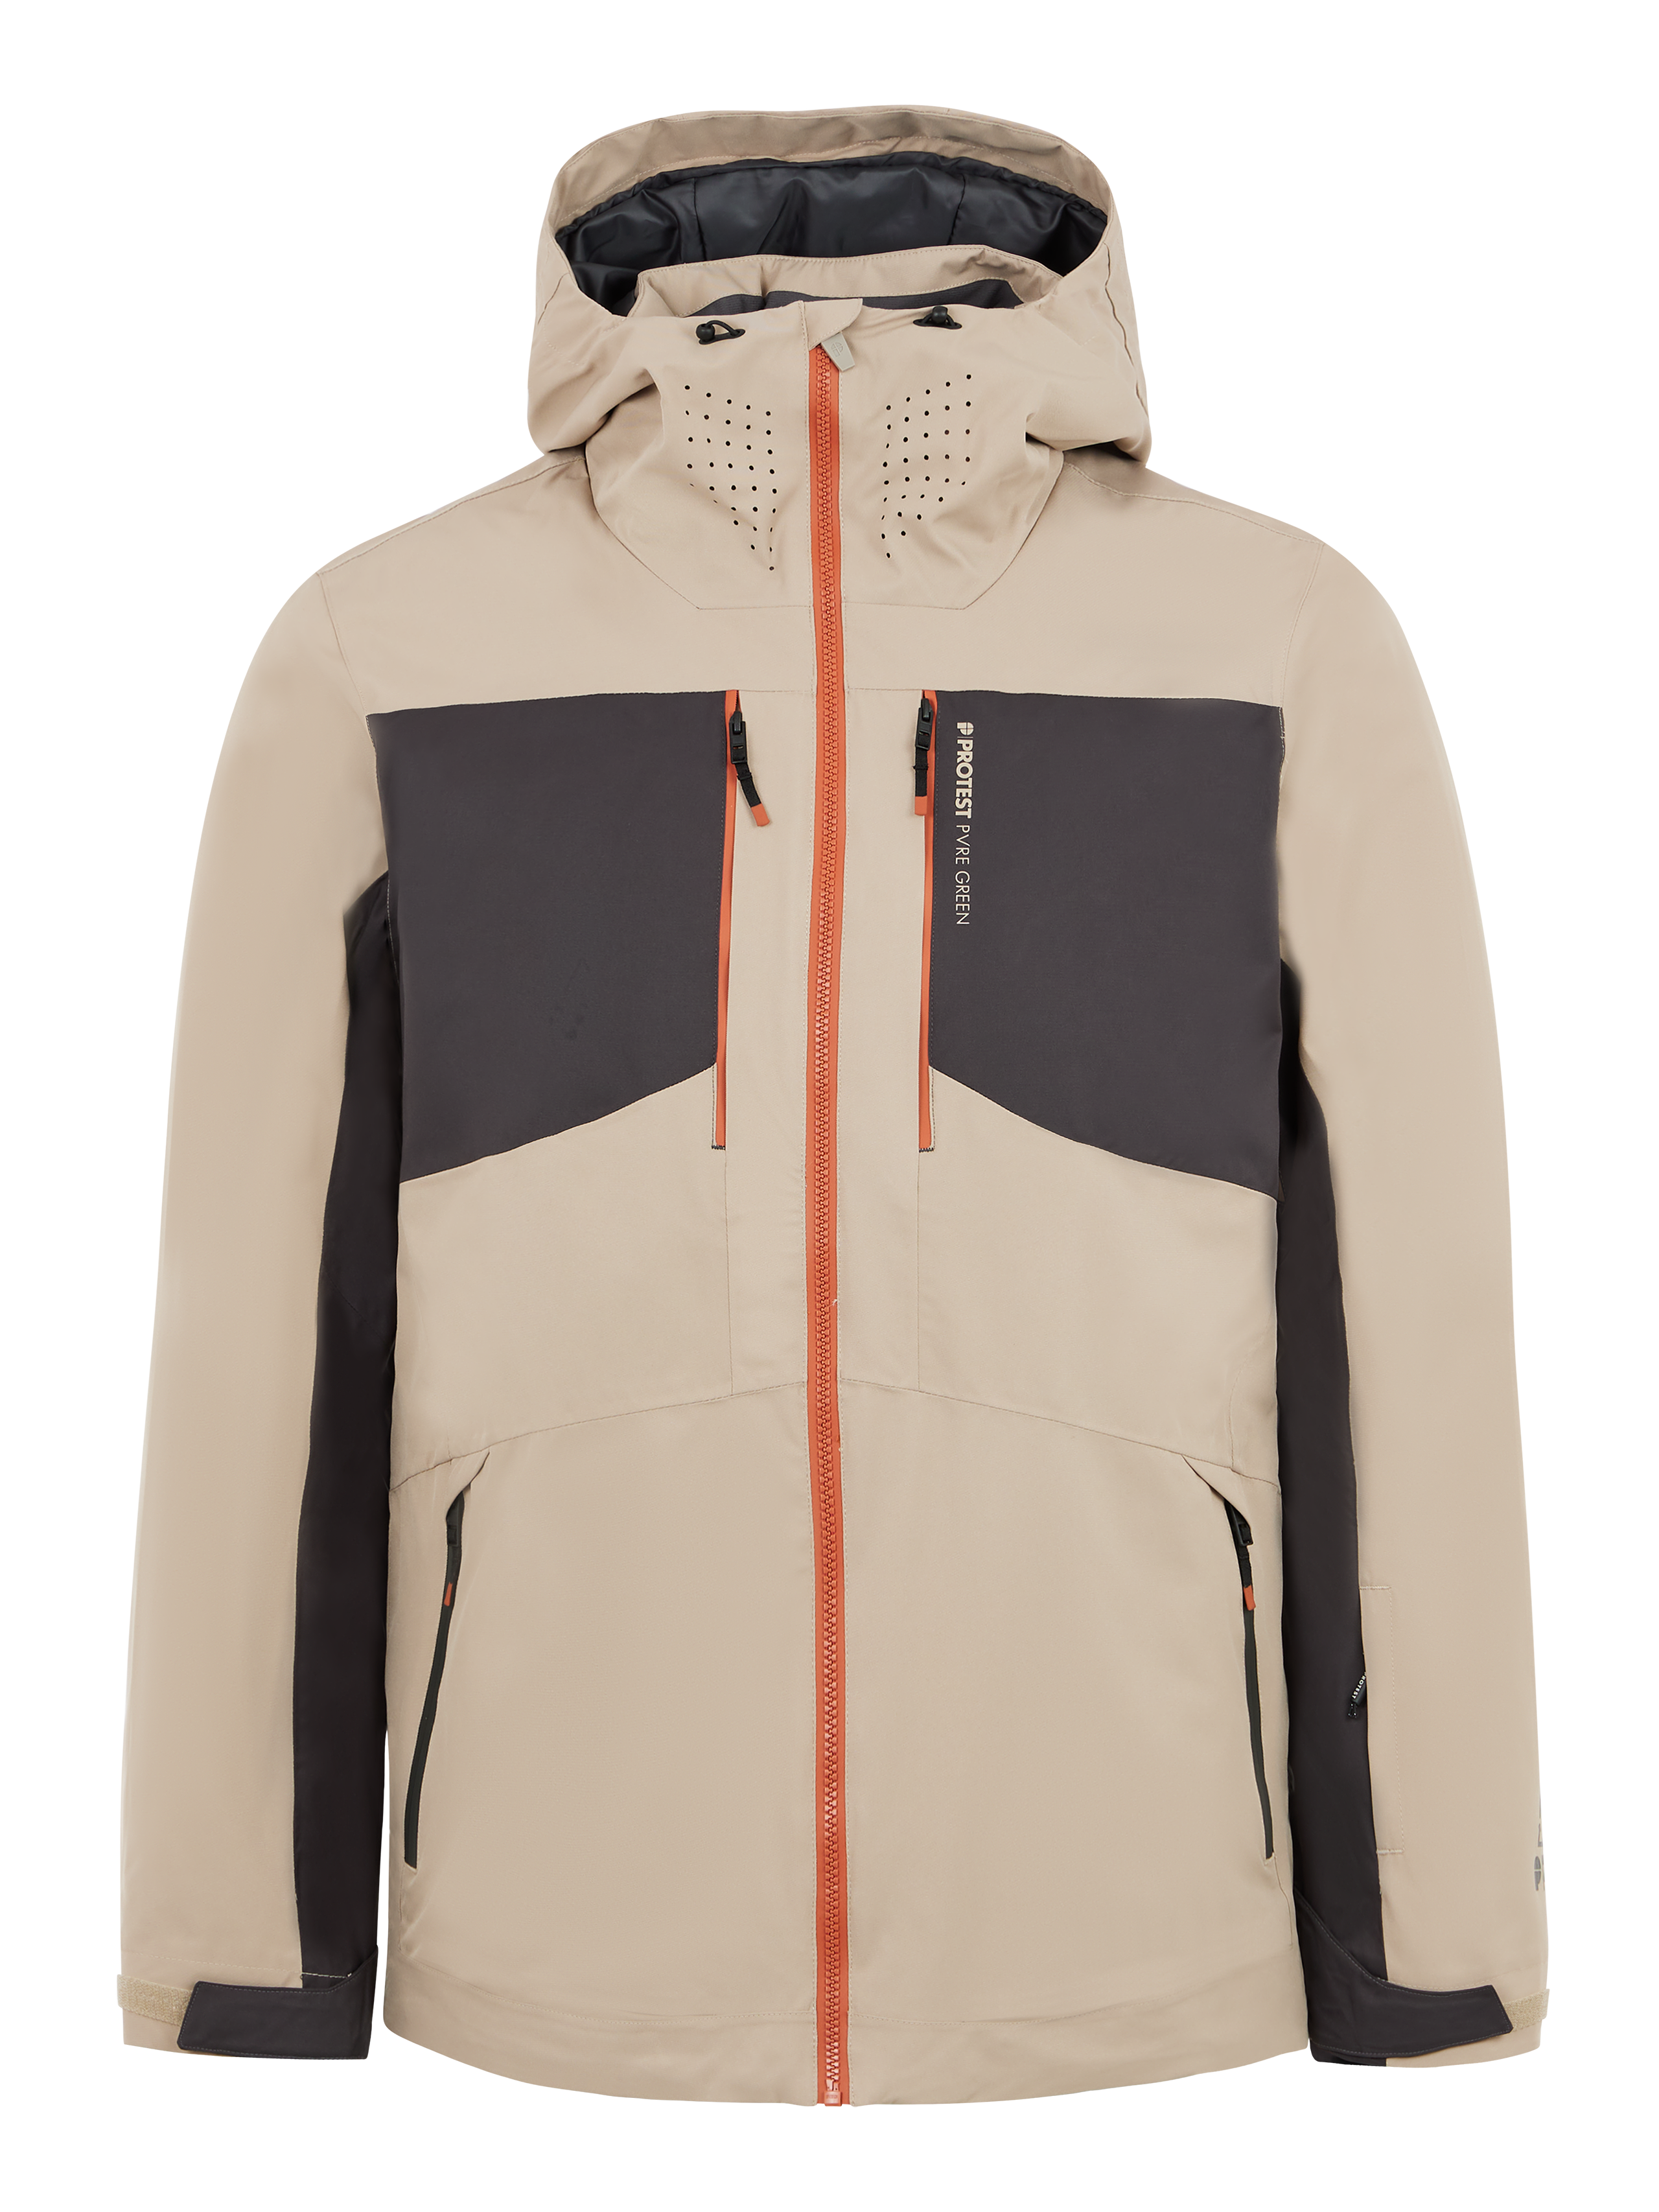 Field Insulated Ski Jacket Safari (Beige) Mens Spyder, 47% OFF